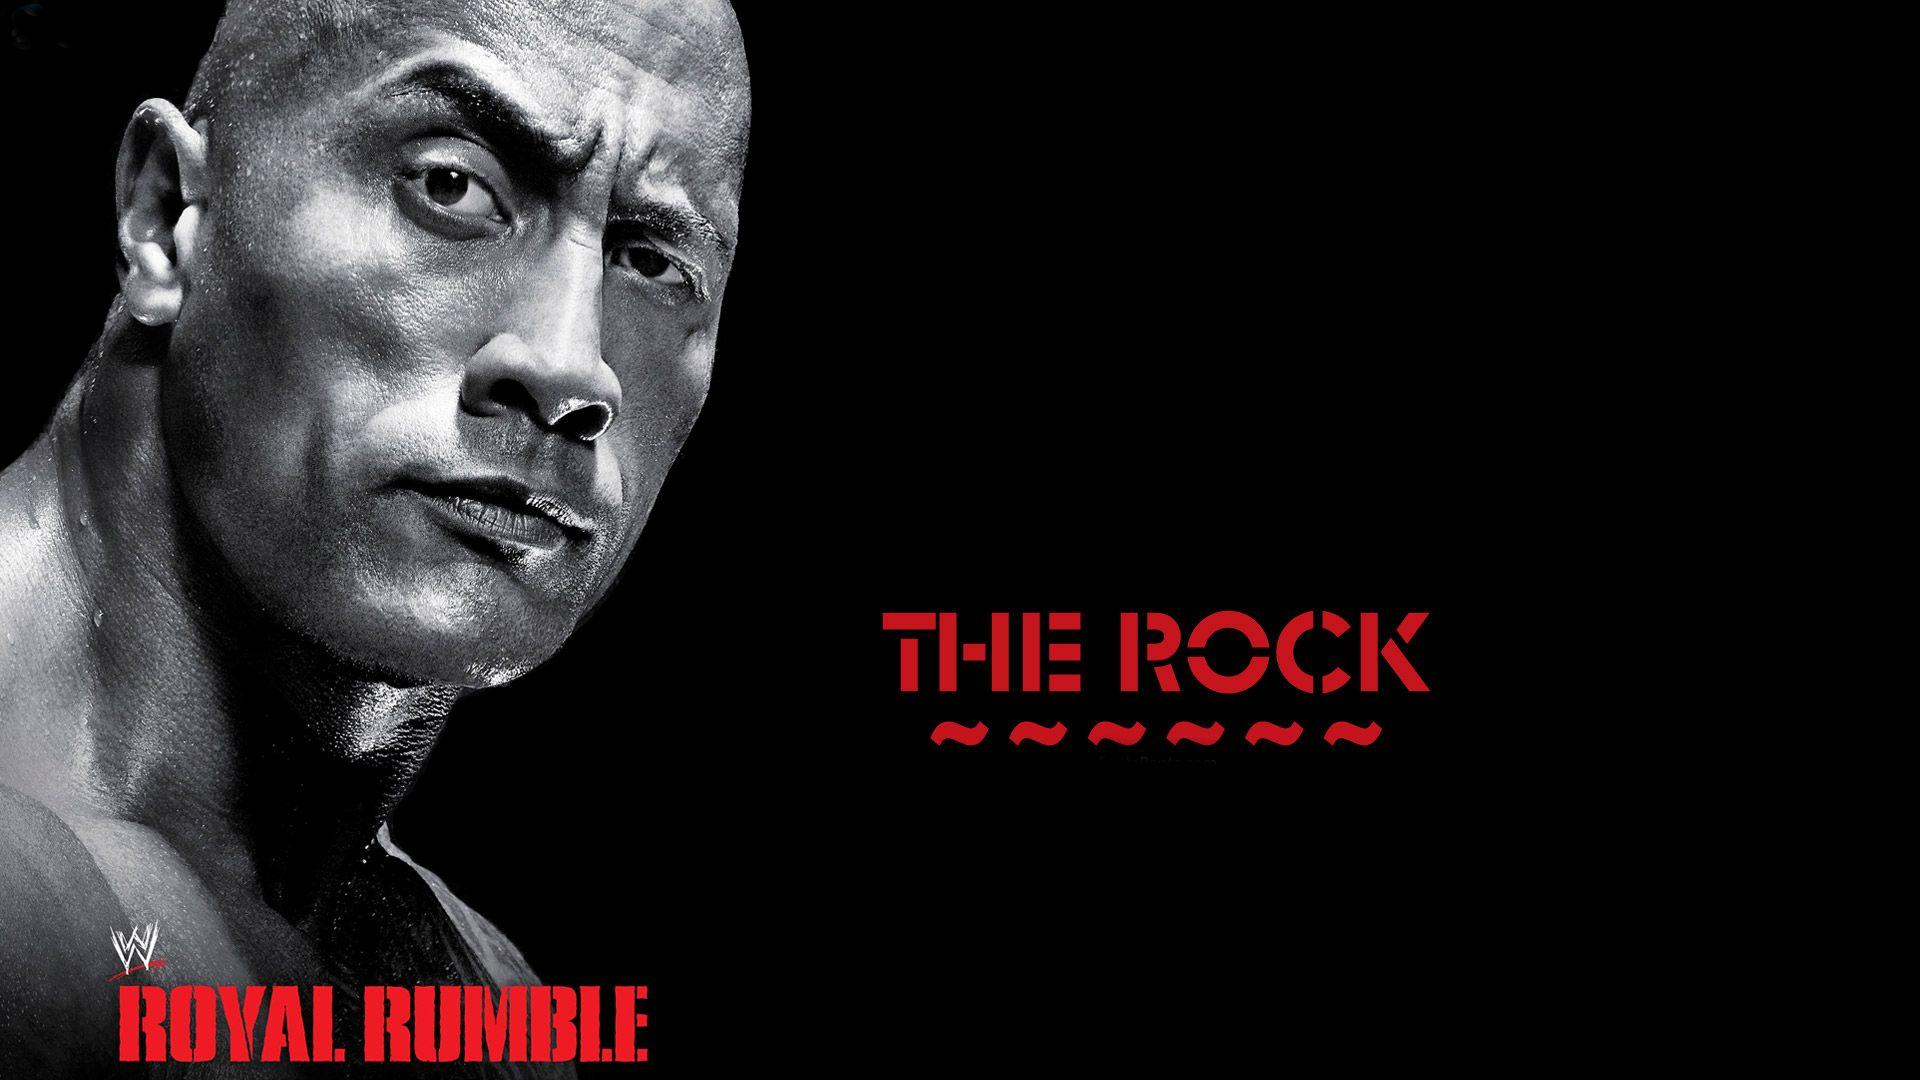 Sus Dwayne 'The Rock' Johnson